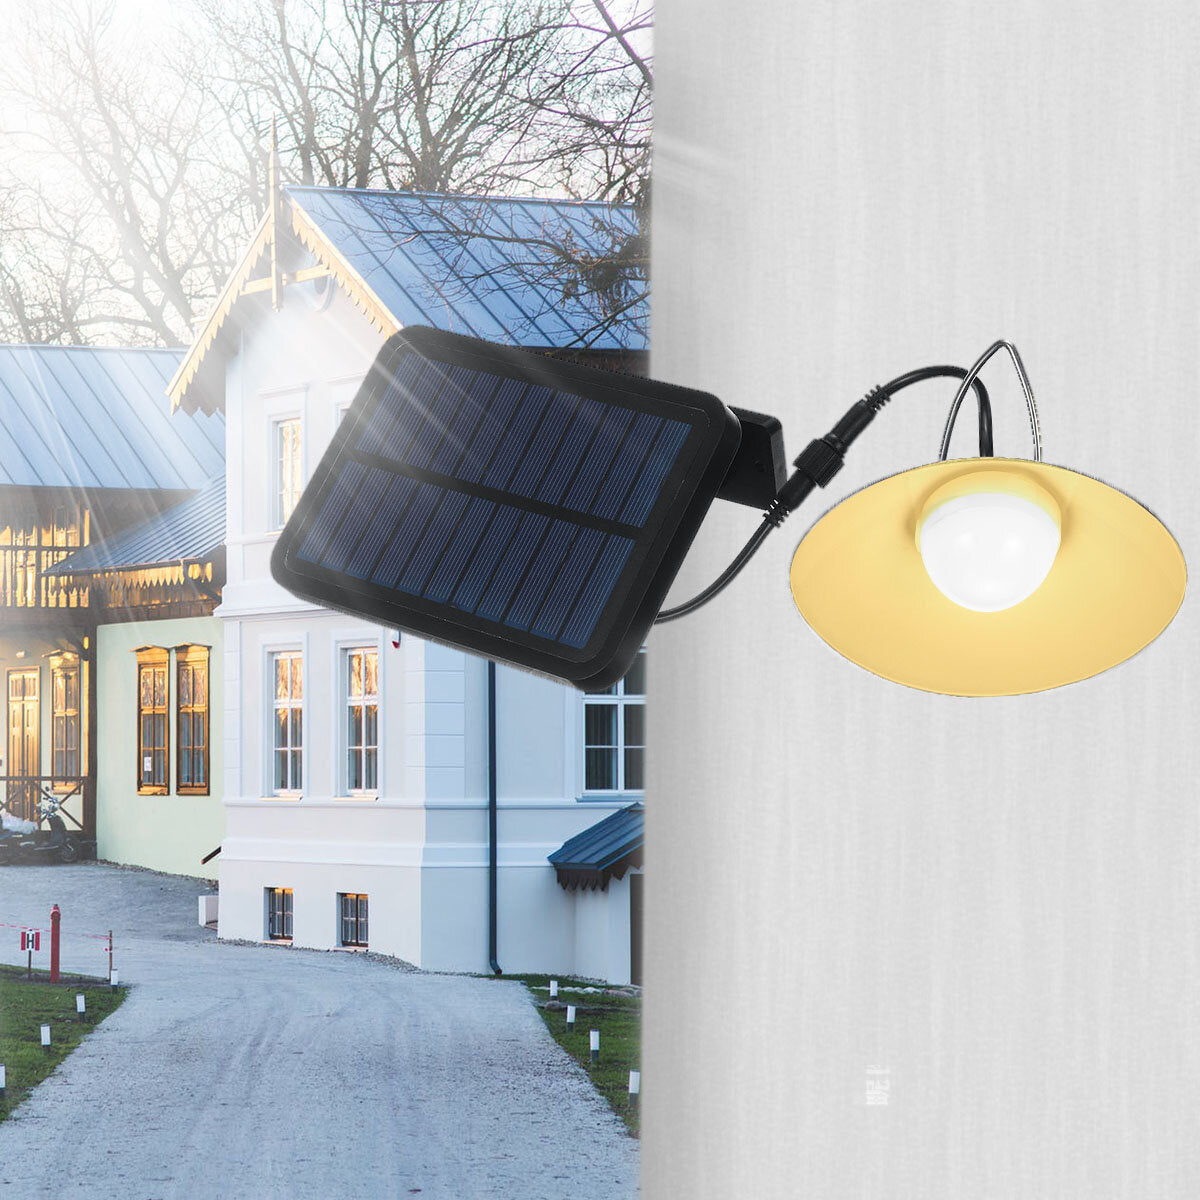 260 Lumen Solar Pendant Light Outdoor Indoor Solar Lamp With Line Warm White/White Lighting For Camping Garden Yard